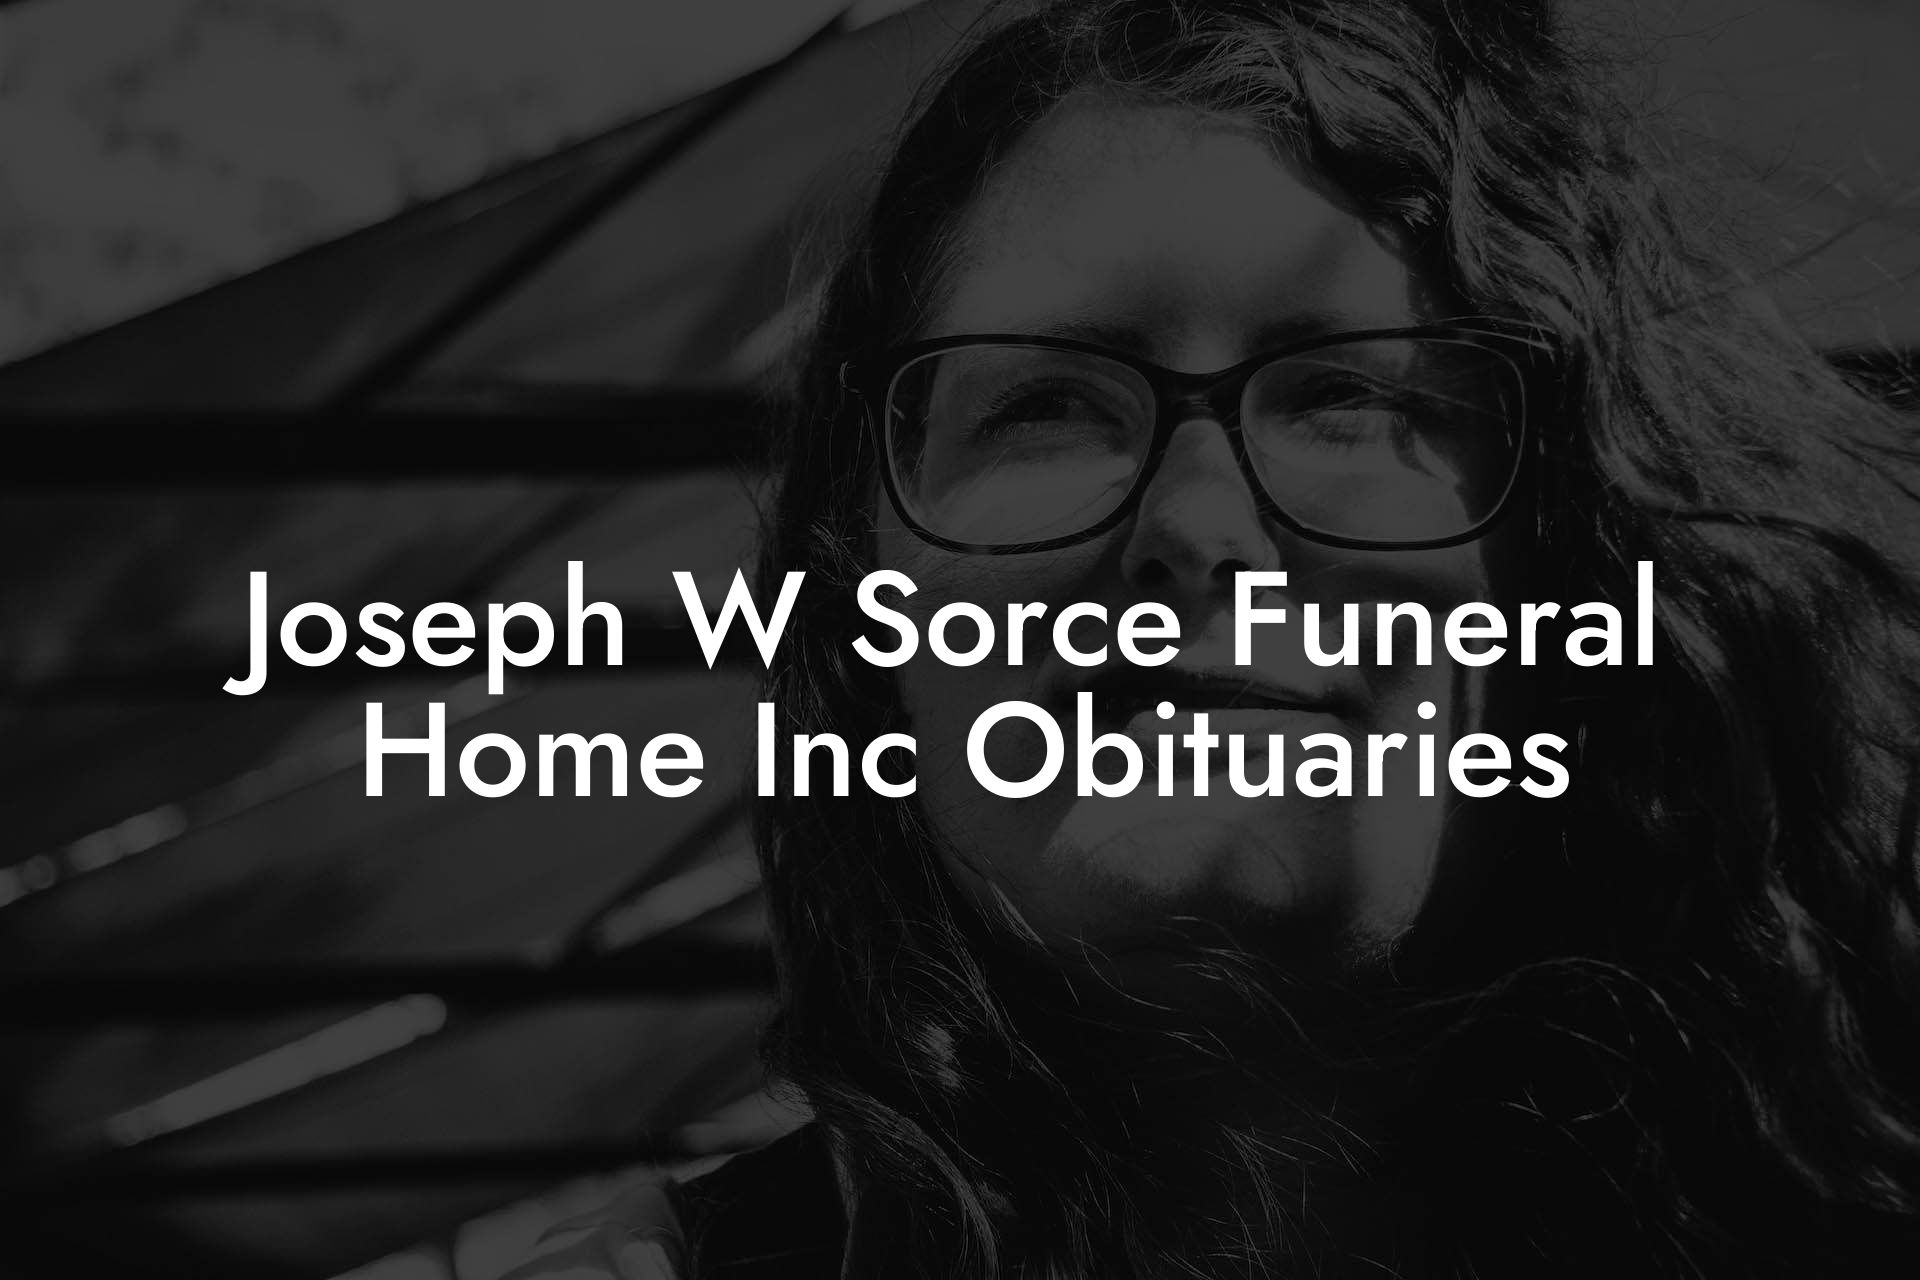 Joseph W. Sorce Funeral Home Inc Obituaries